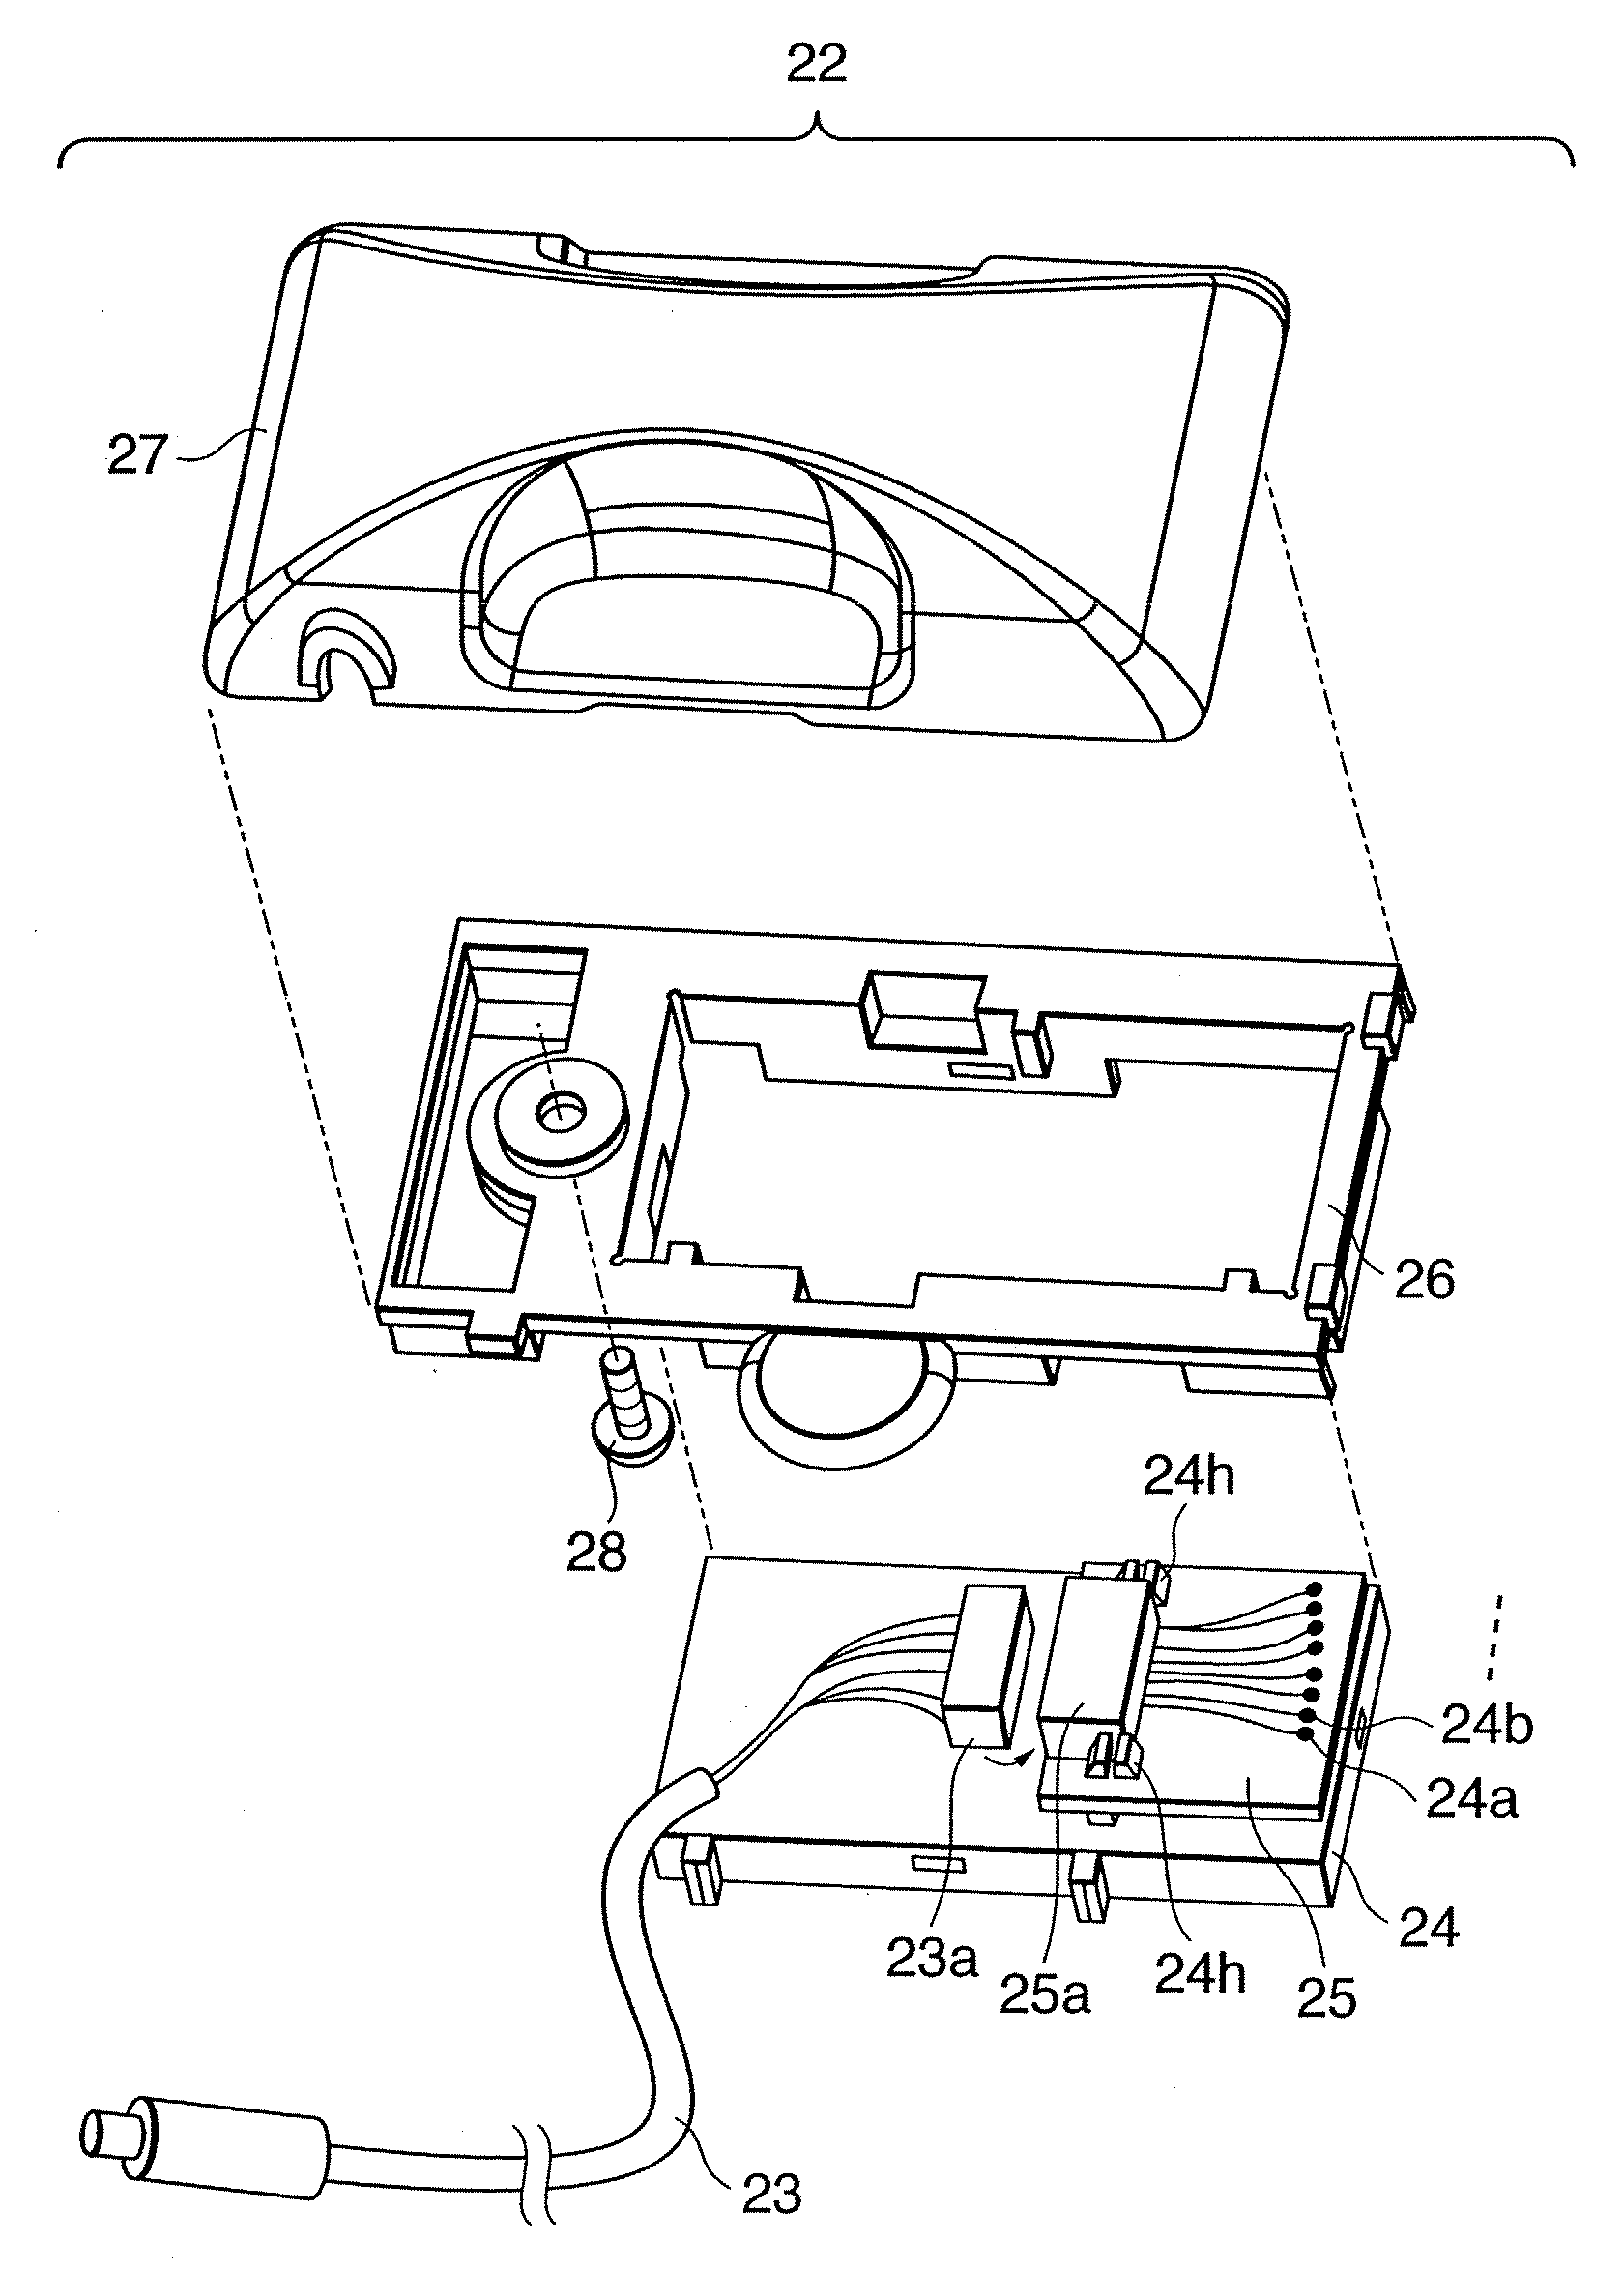 Image reading apparatus